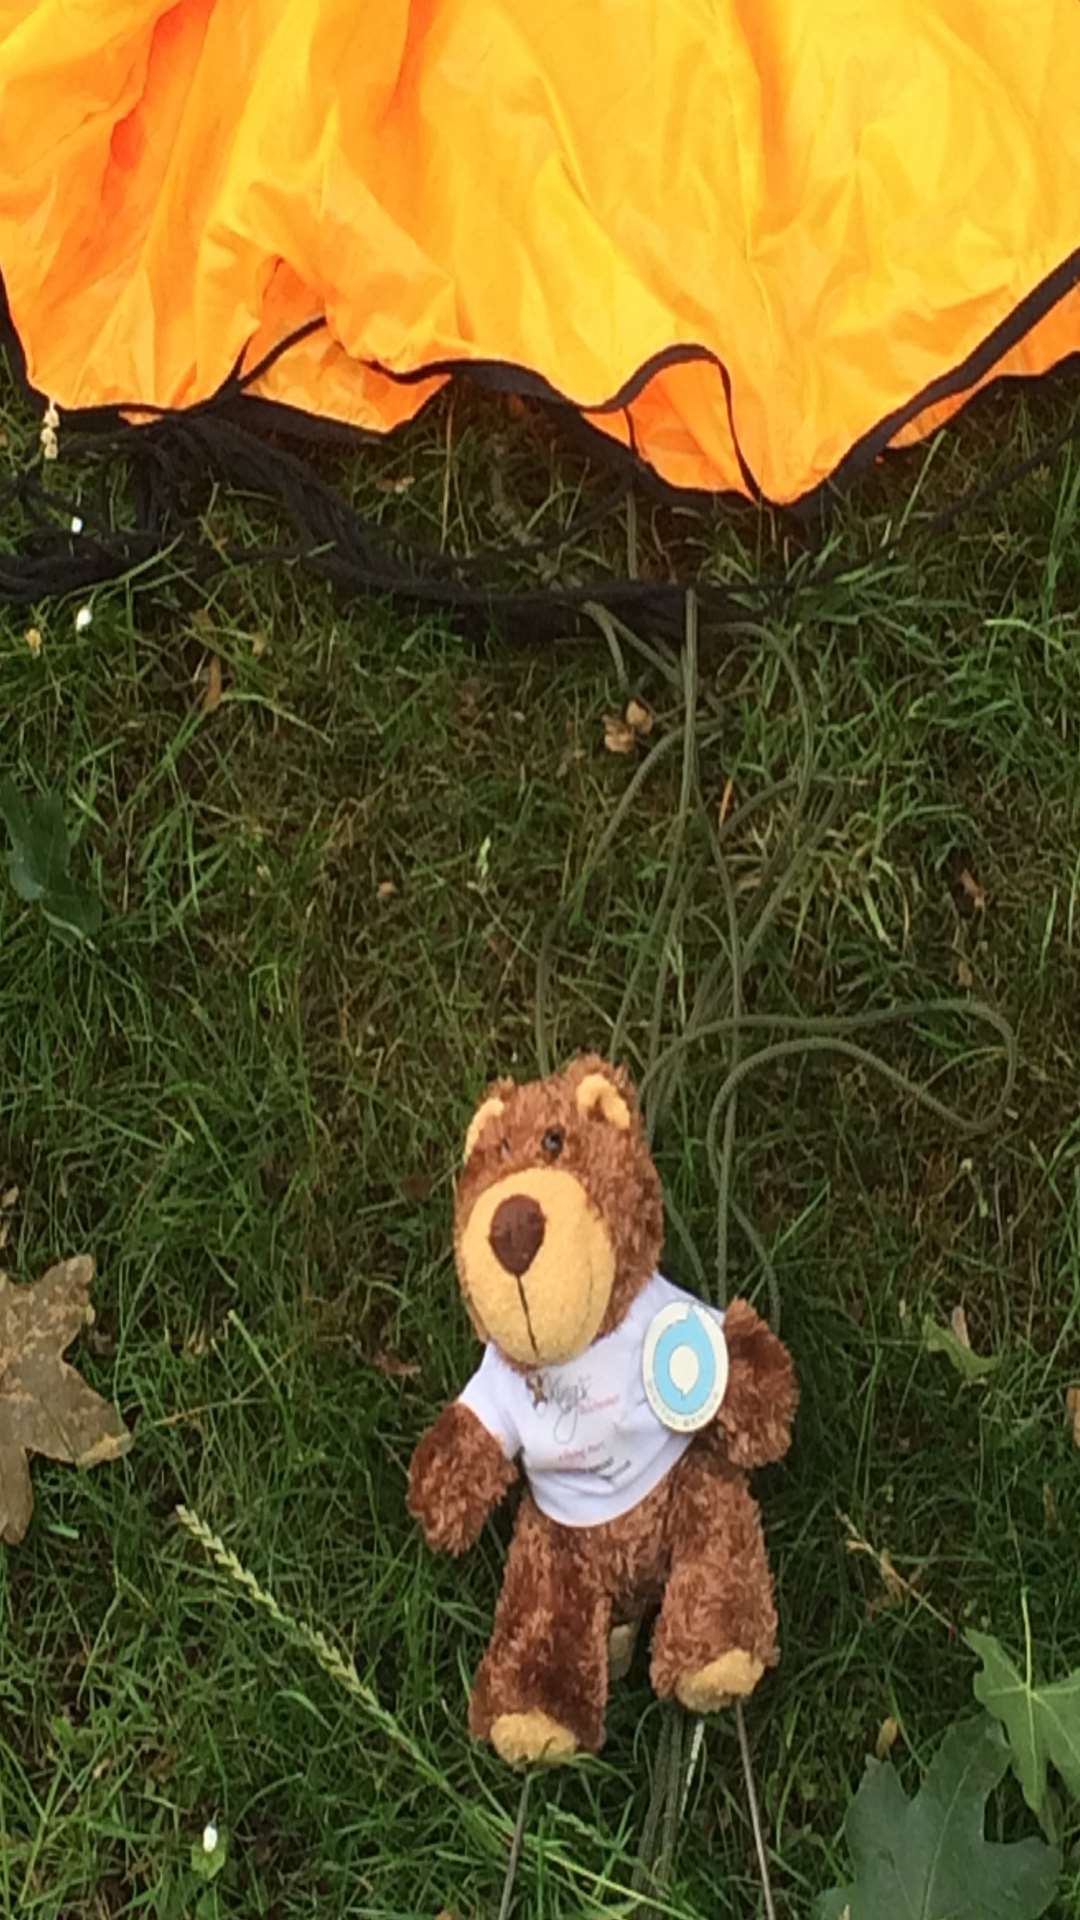 Roffa the bear and his parachute